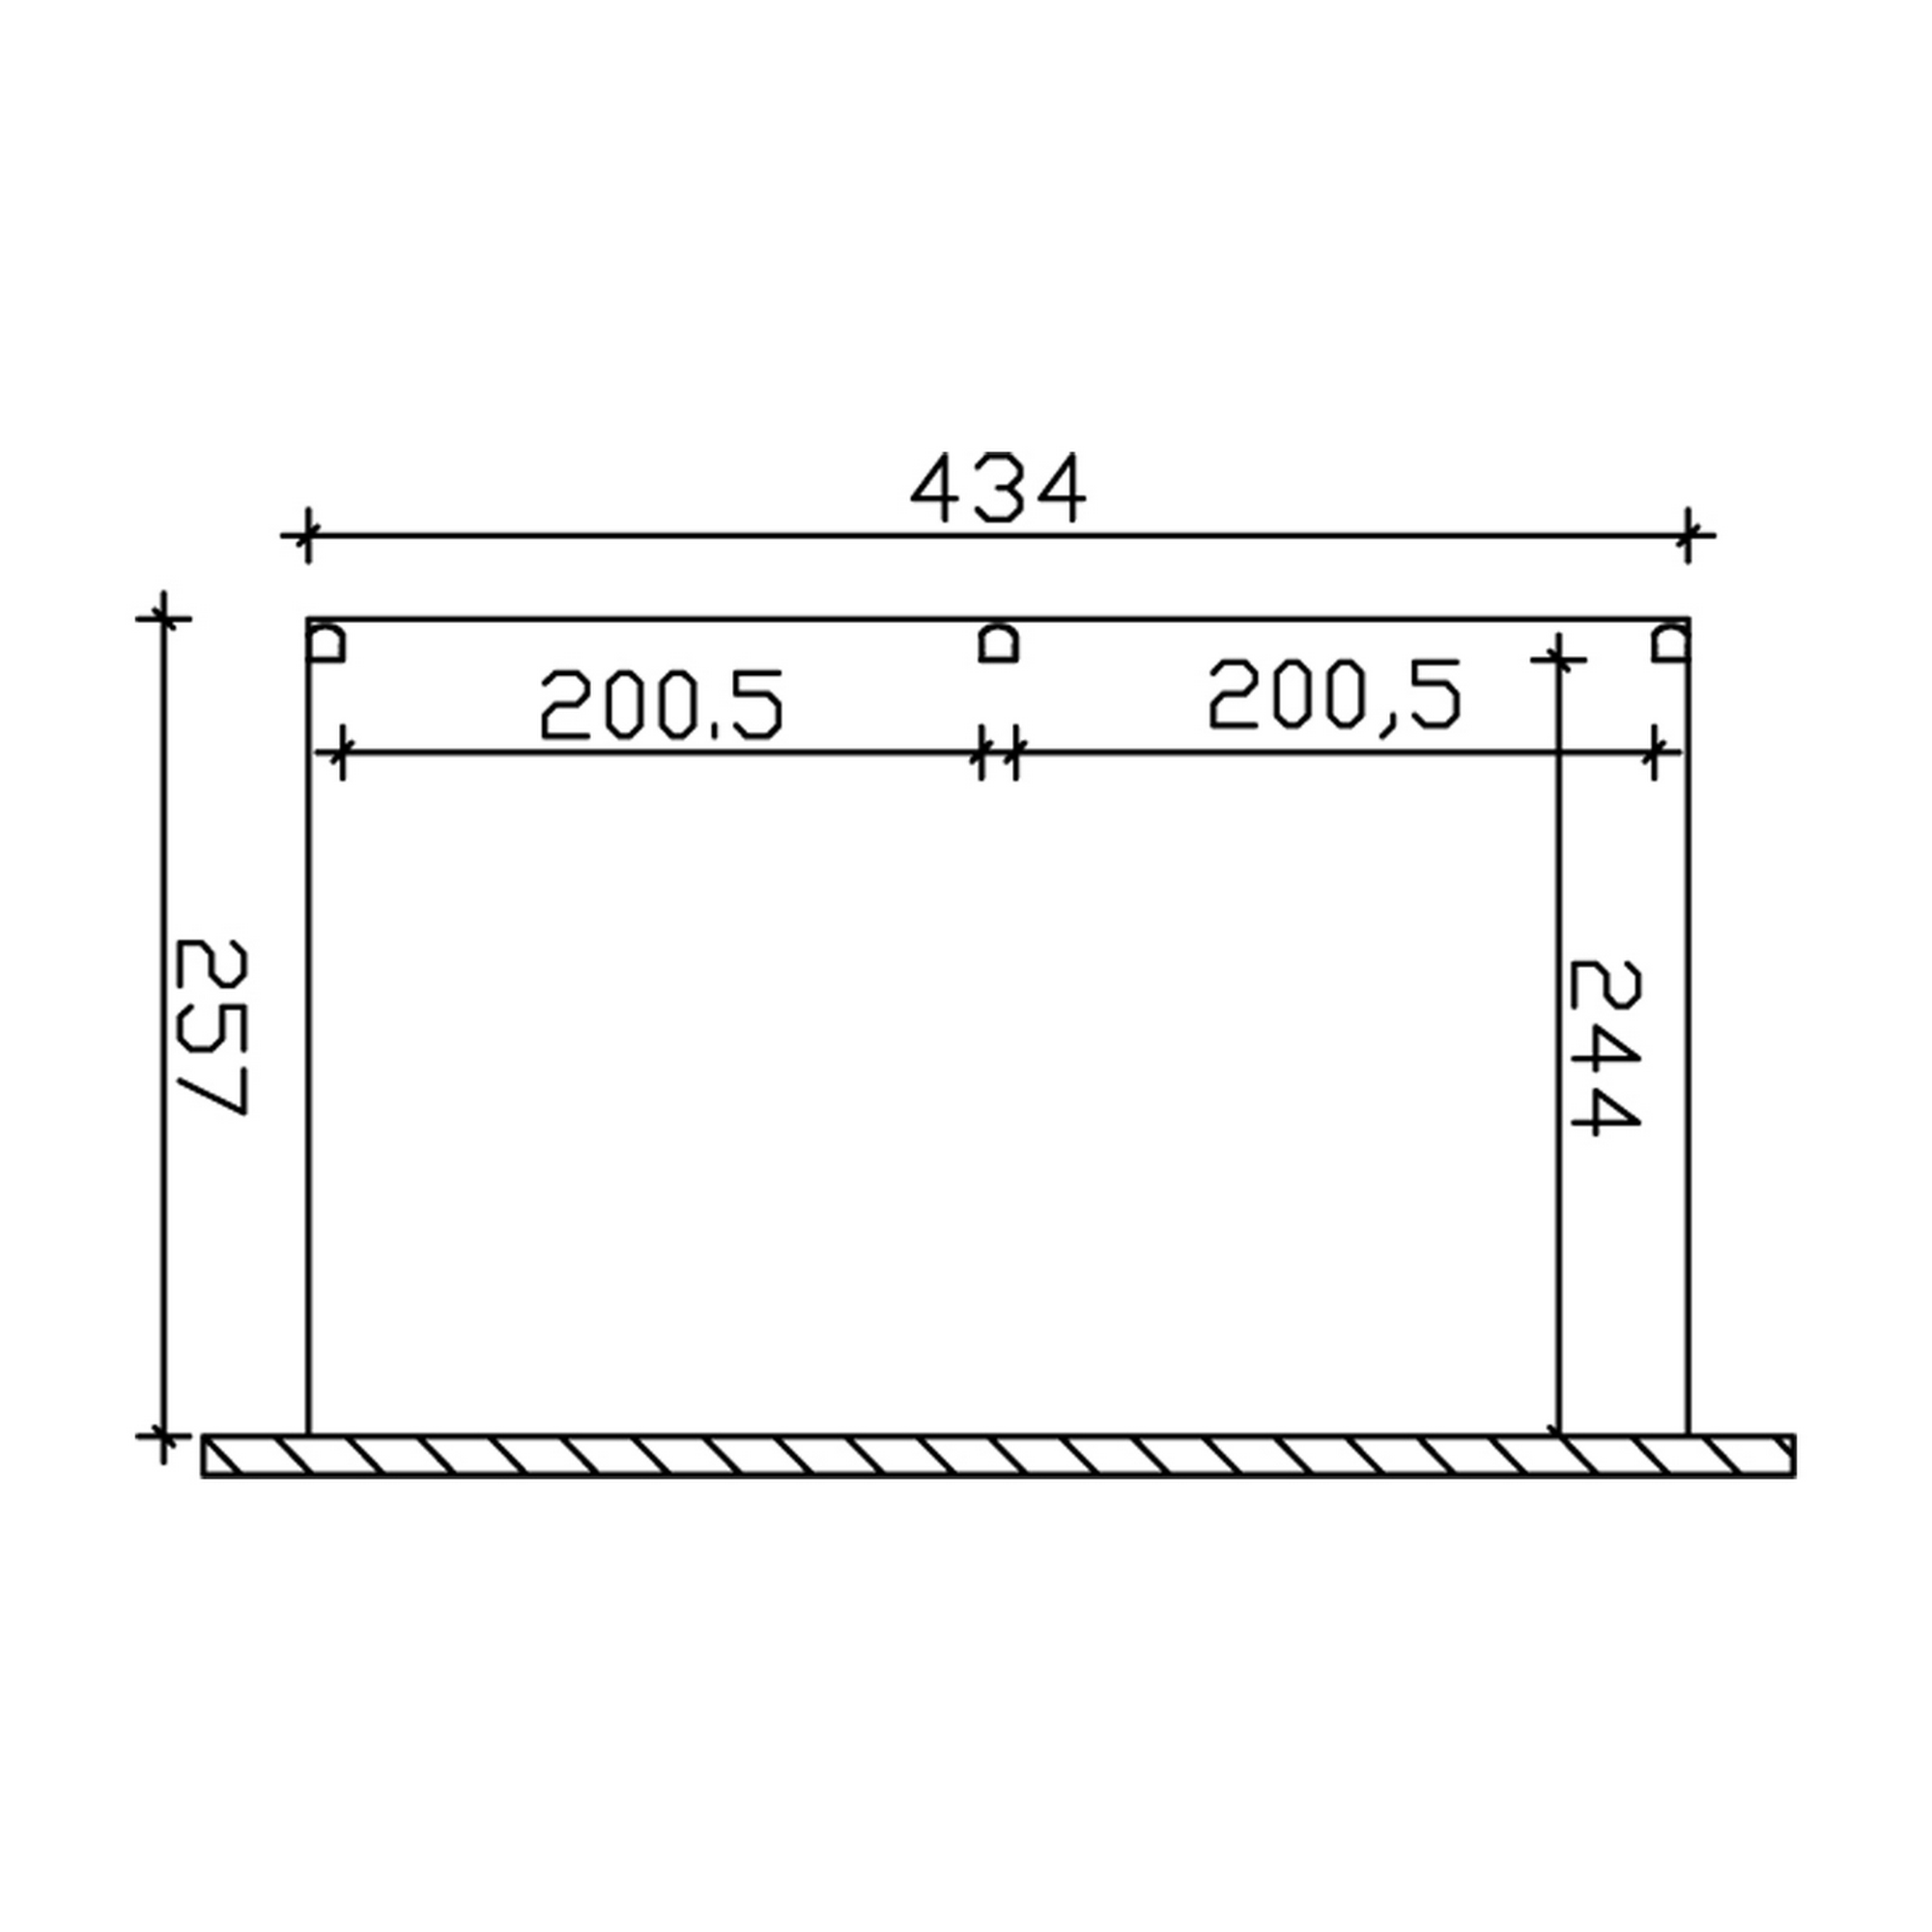 Terrassenüberdachung 'Garda' 434 x 257 cm Aluminium Doppelstegplatten anthrazit + product picture